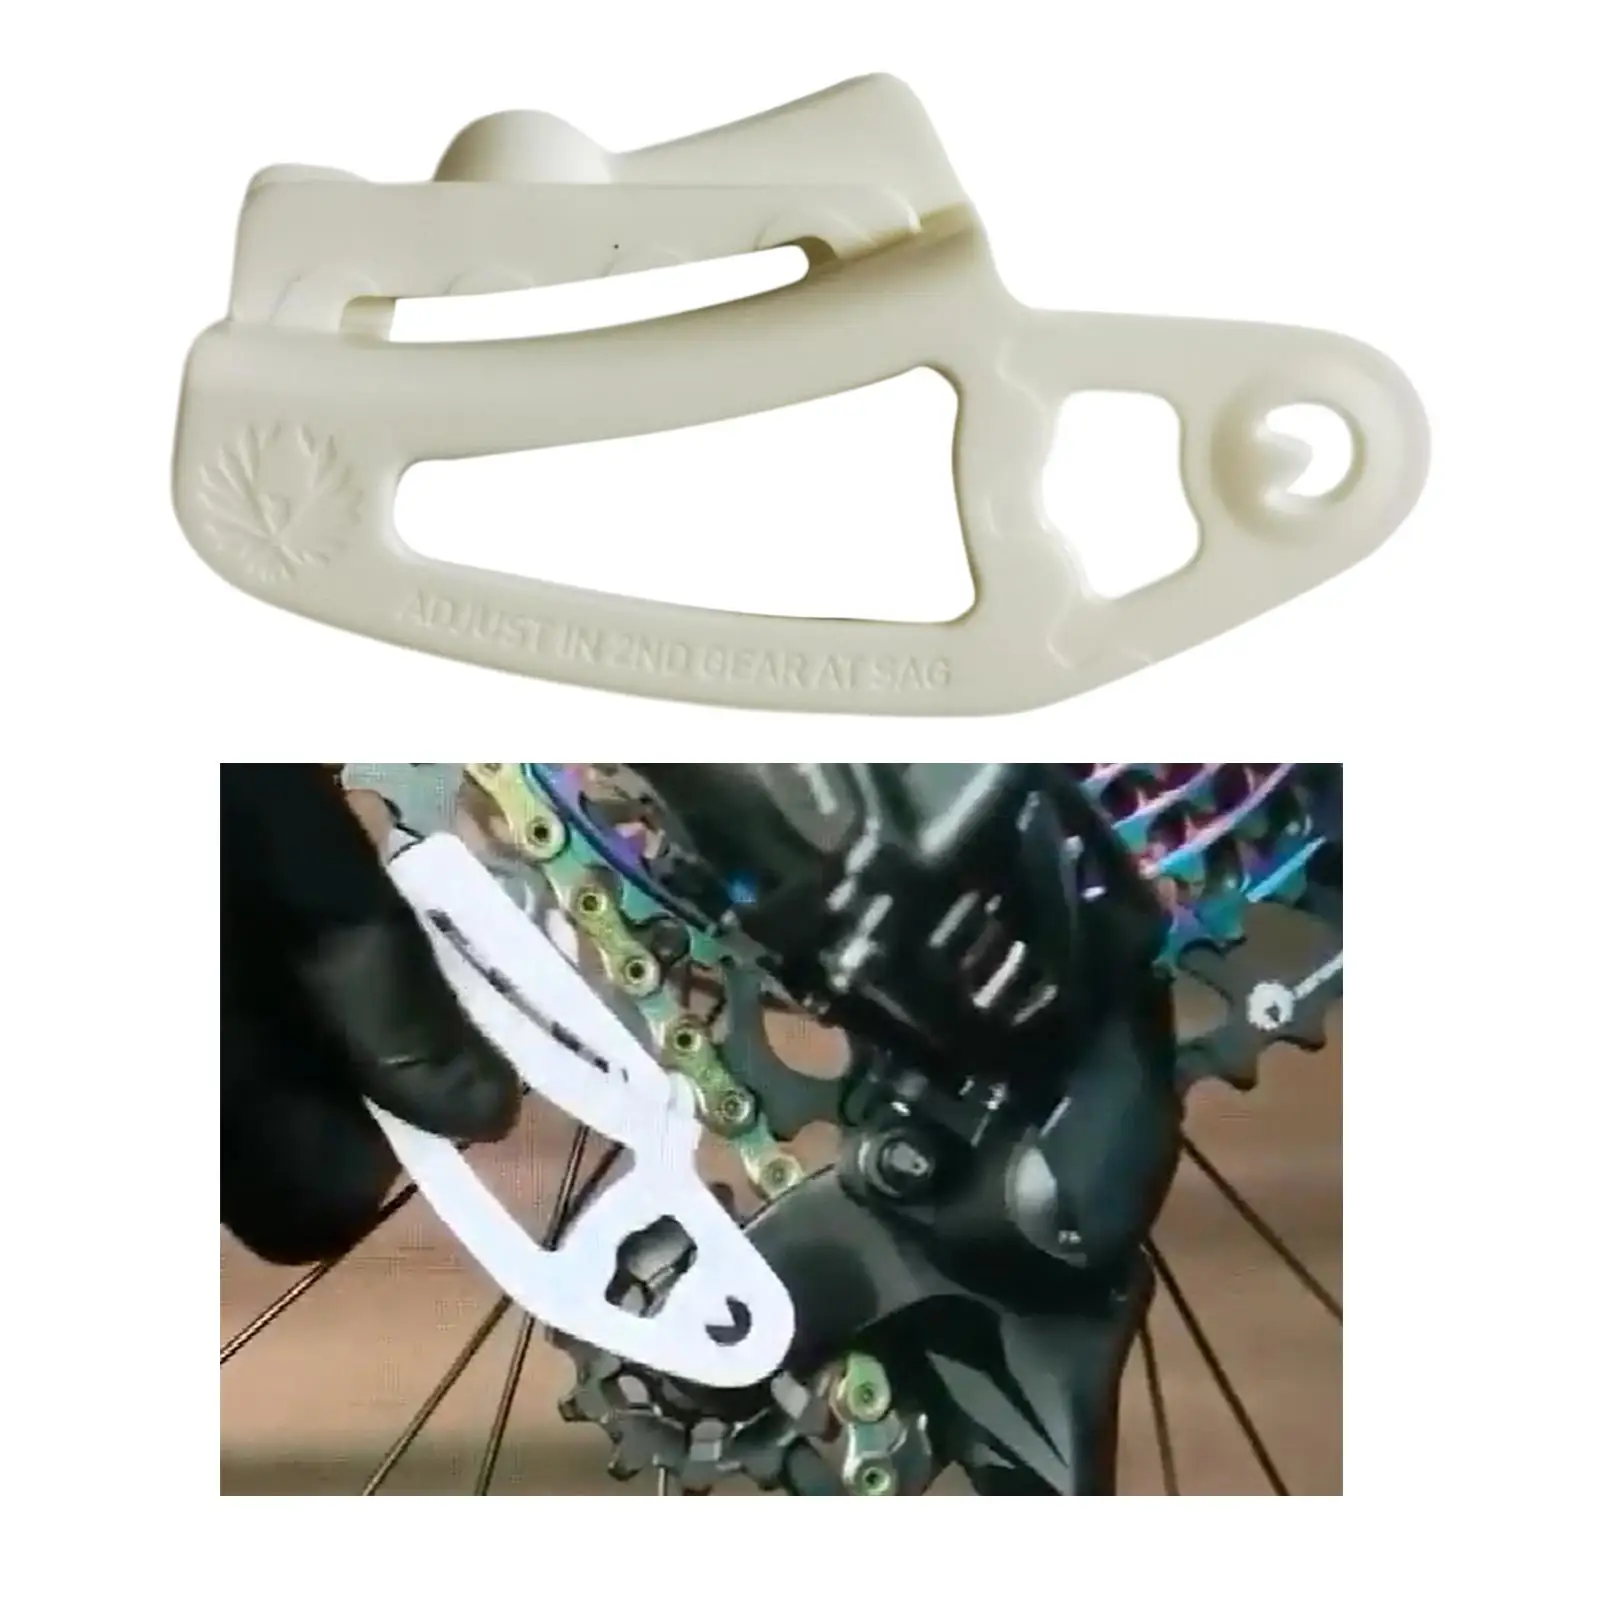 Rear Derailleur Chaingap Adjustment Gauge Bike Chain Tool,